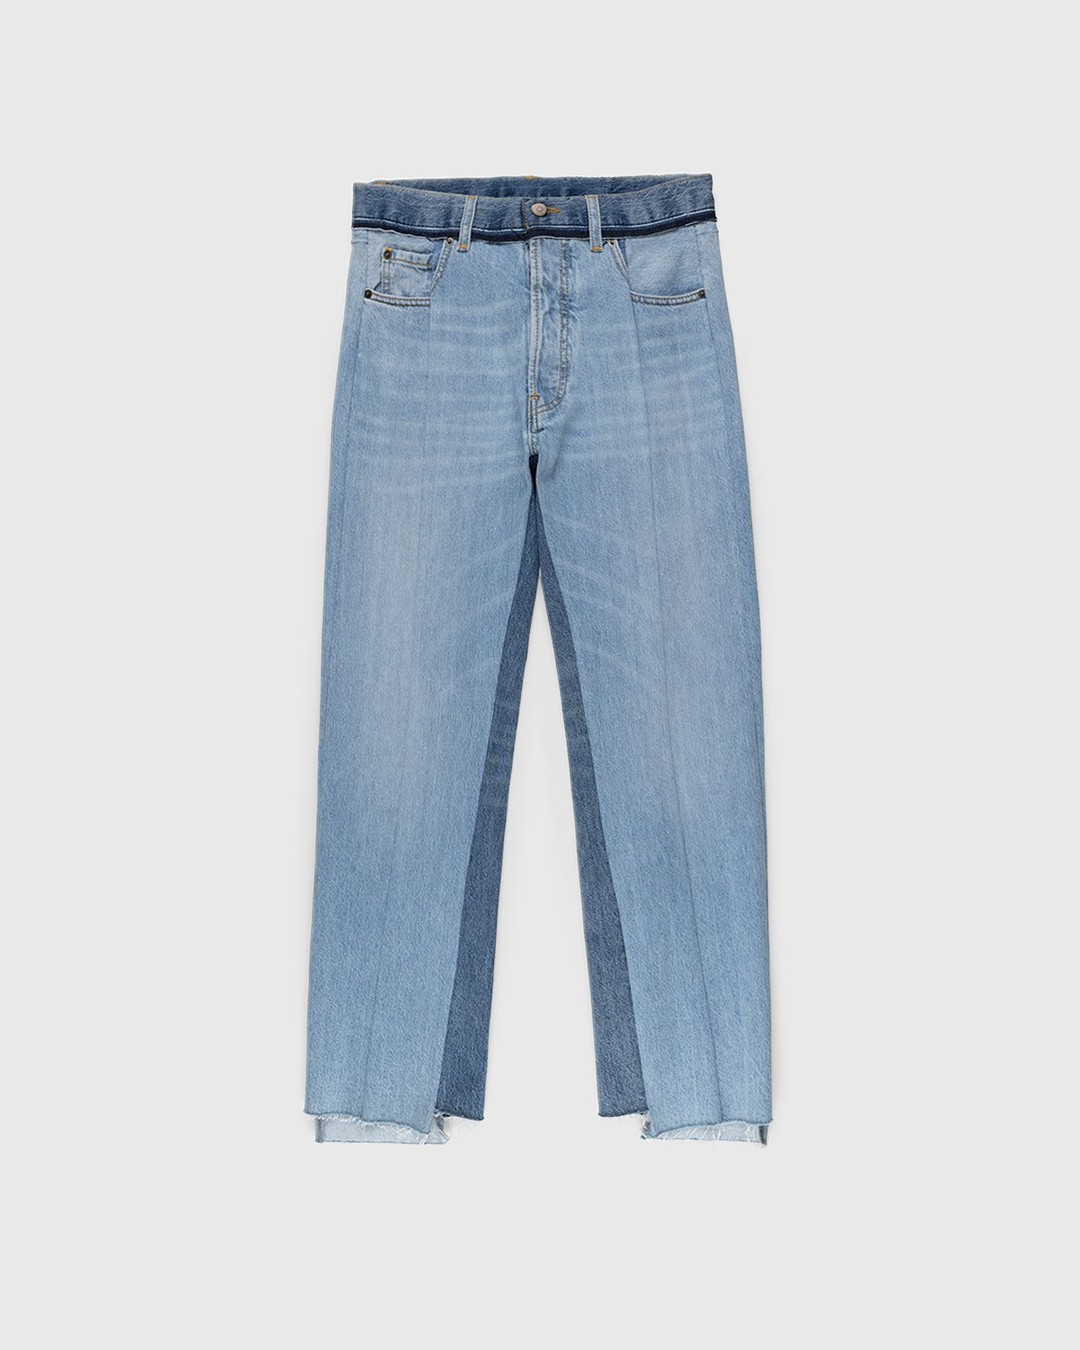 Maison Margiela – Spliced Jeans Blue - Denim - Blue - Image 1